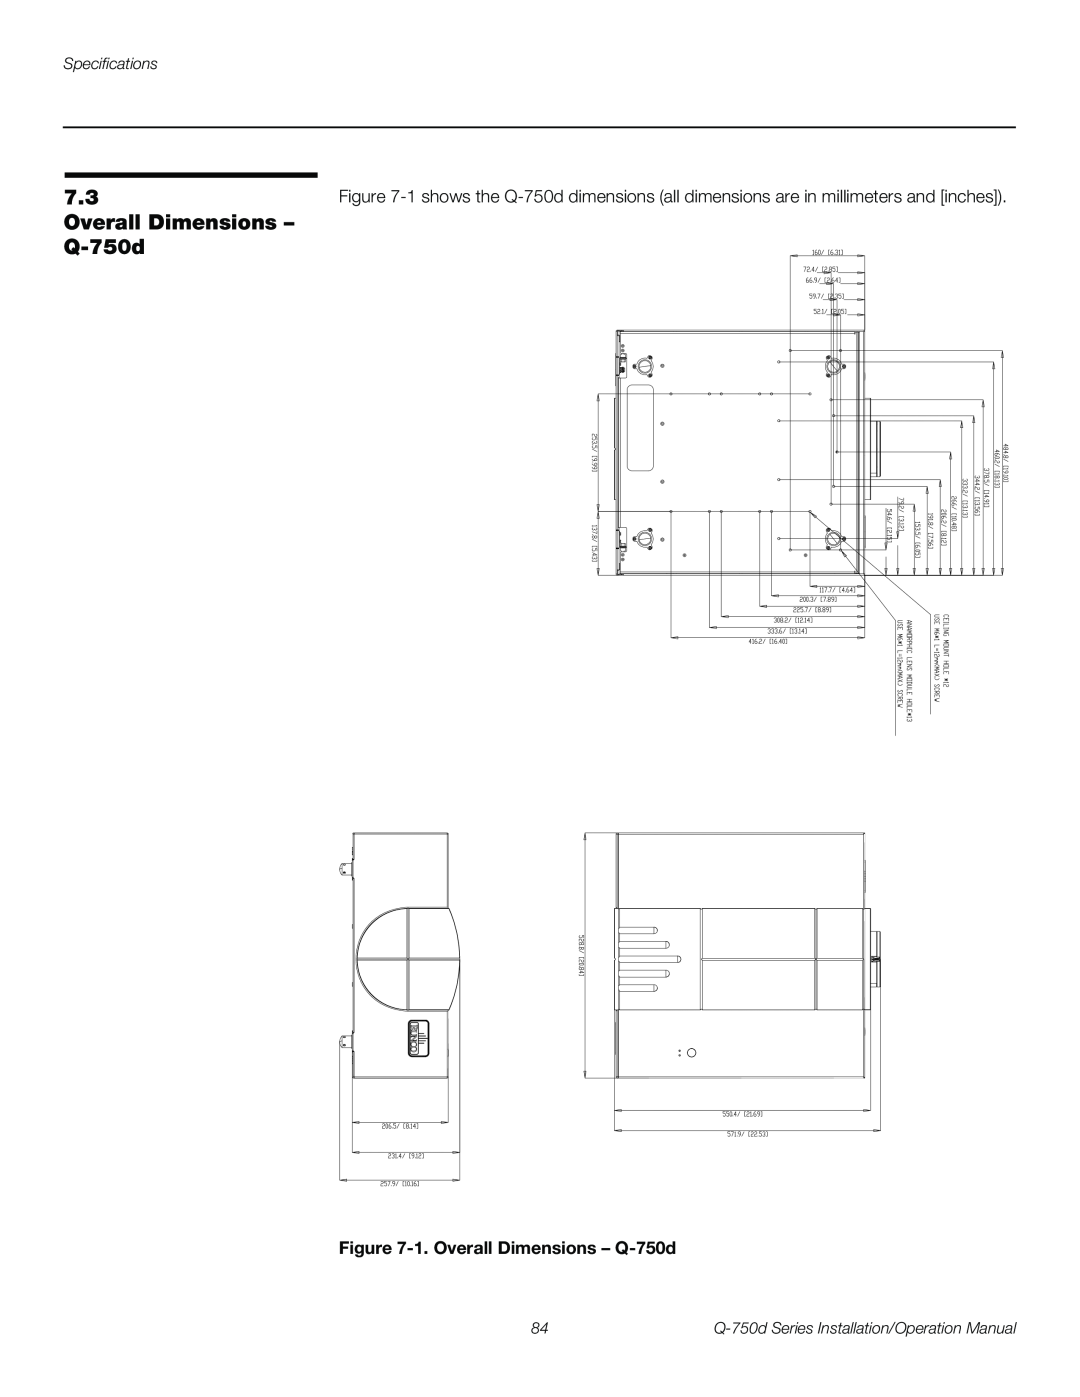 Runco Q-750D operation manual 1.Overall Dimensions – Q-750d, Specifications 